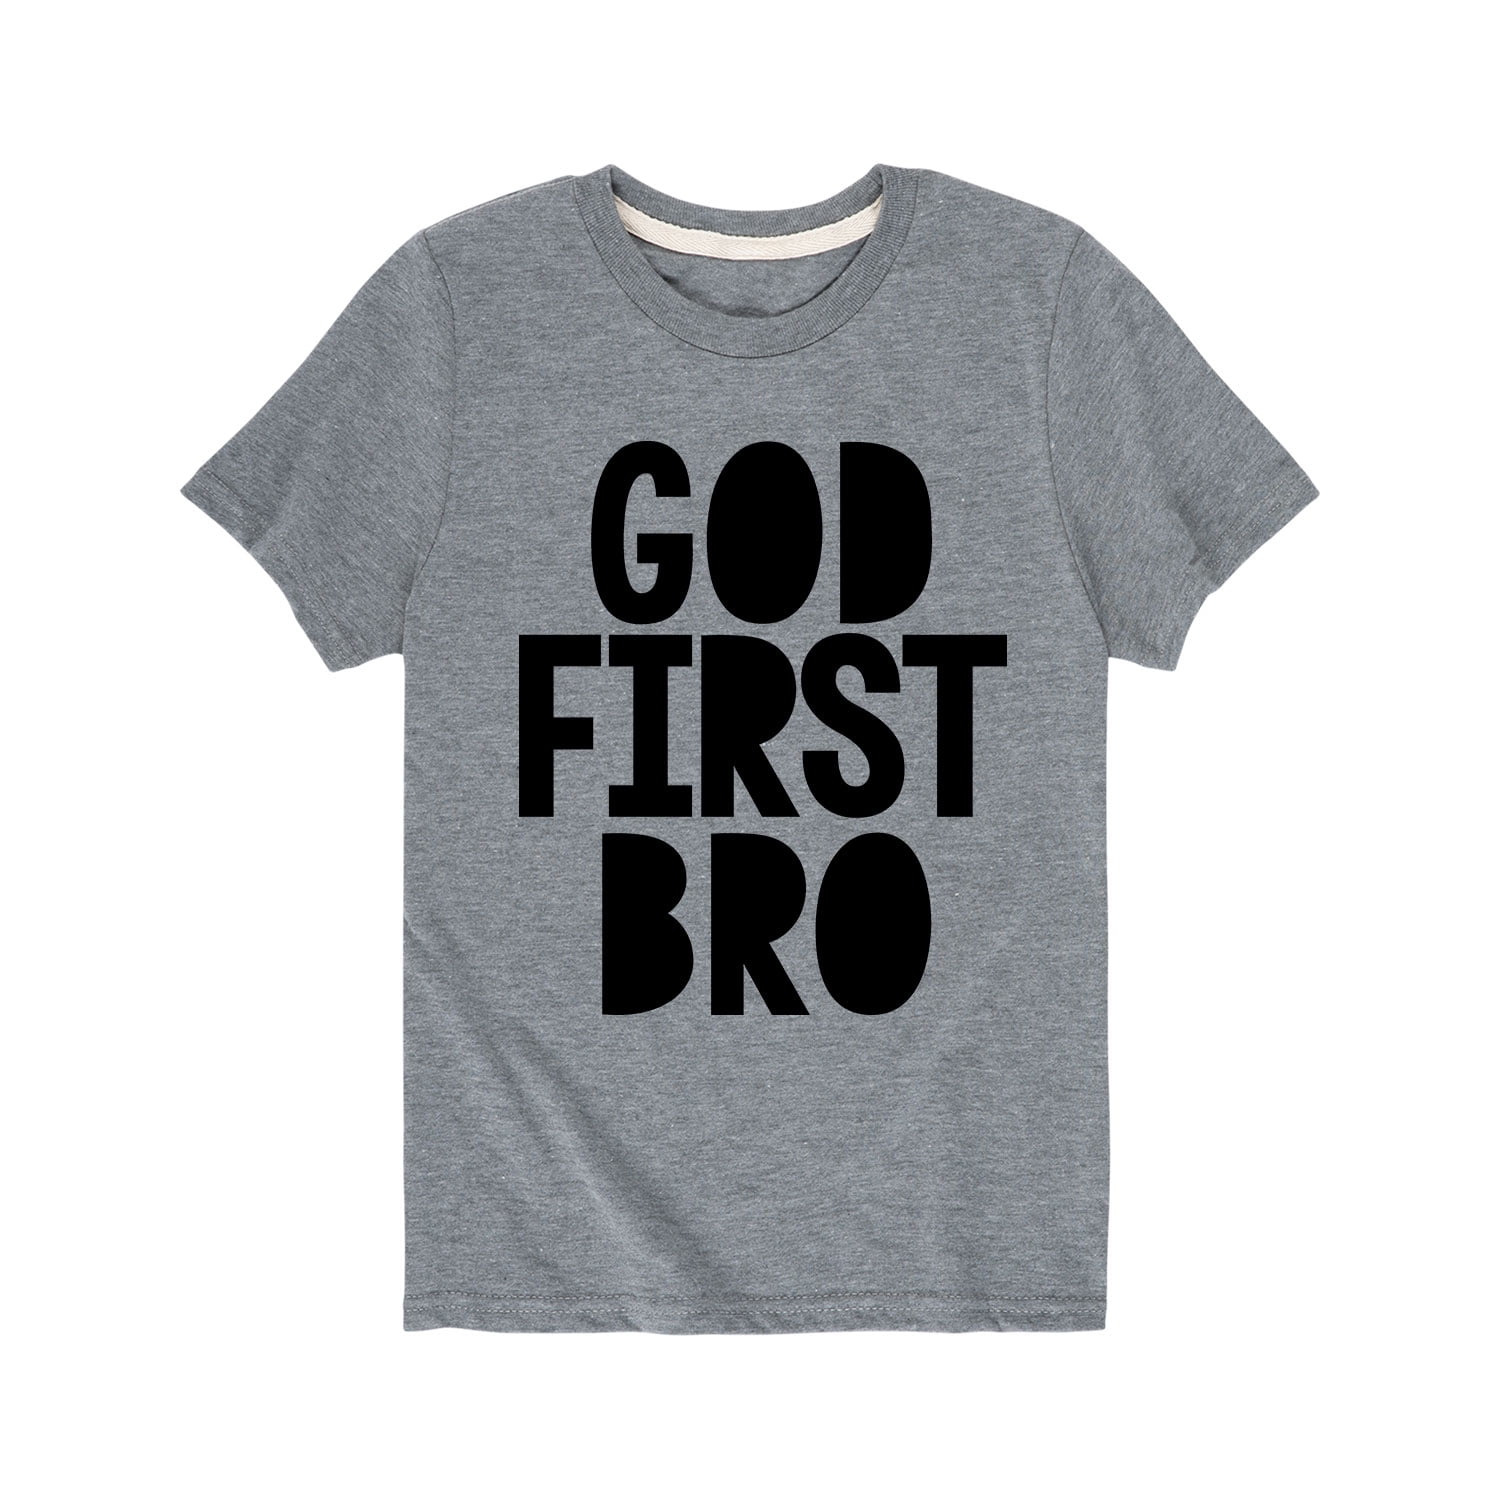 Solid Light - God First Bro - Toddler Short Sleeve Tee - Walmart.com ...